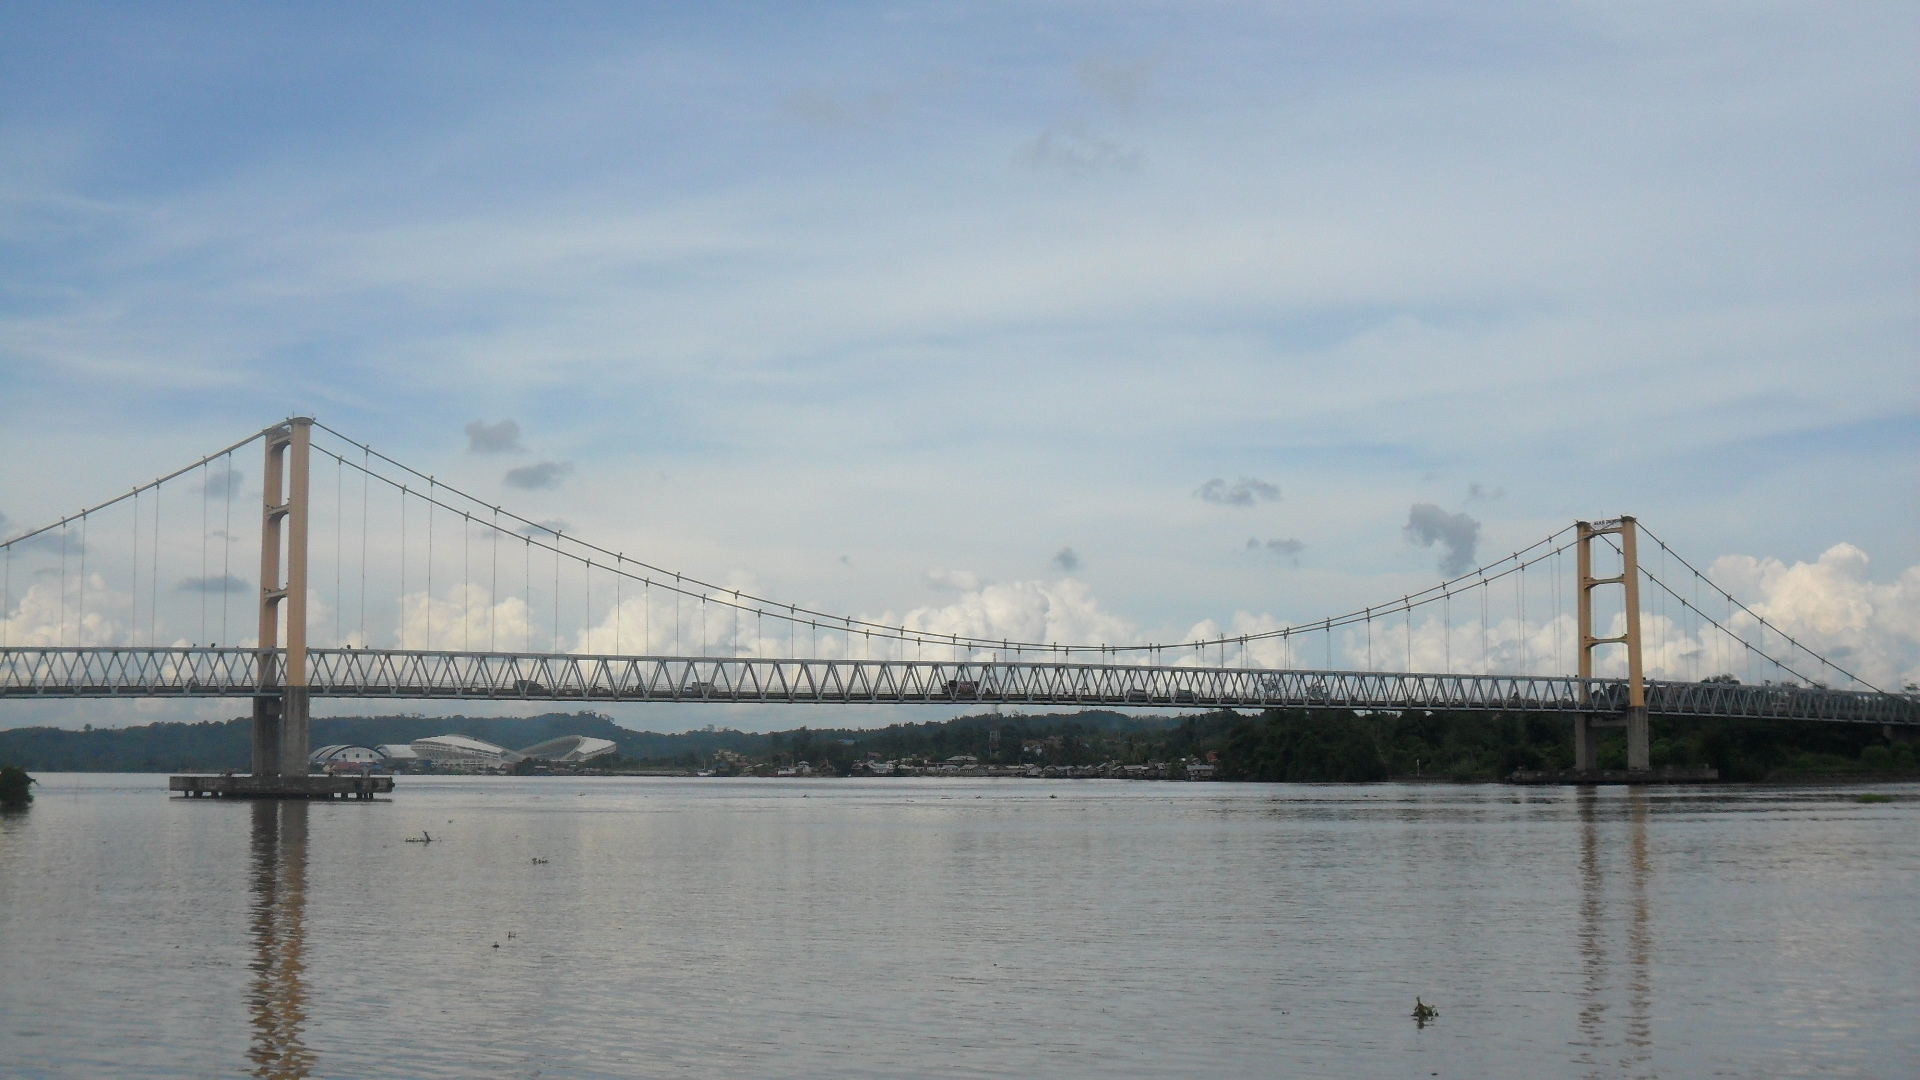 Jembatan